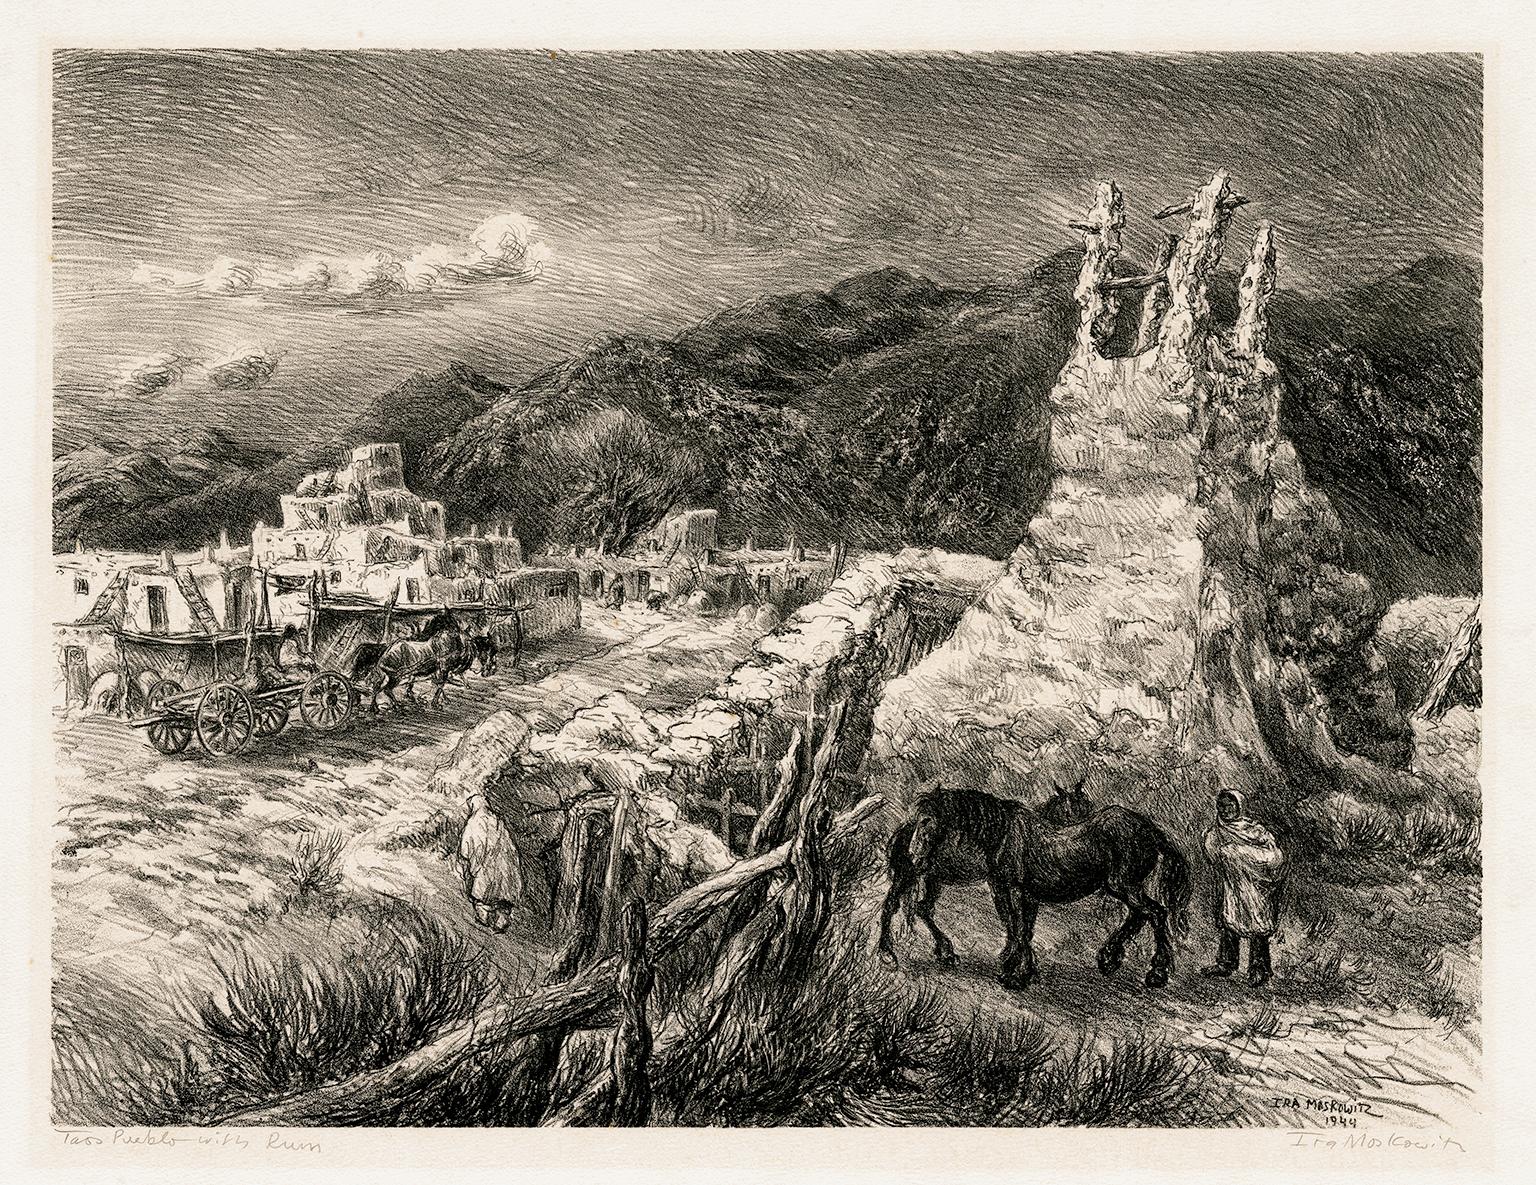 Ira Moskowitz Landscape Print - 'Taos - Relic of the Insurrection of 1845' — 1940s Southwest Regionalism